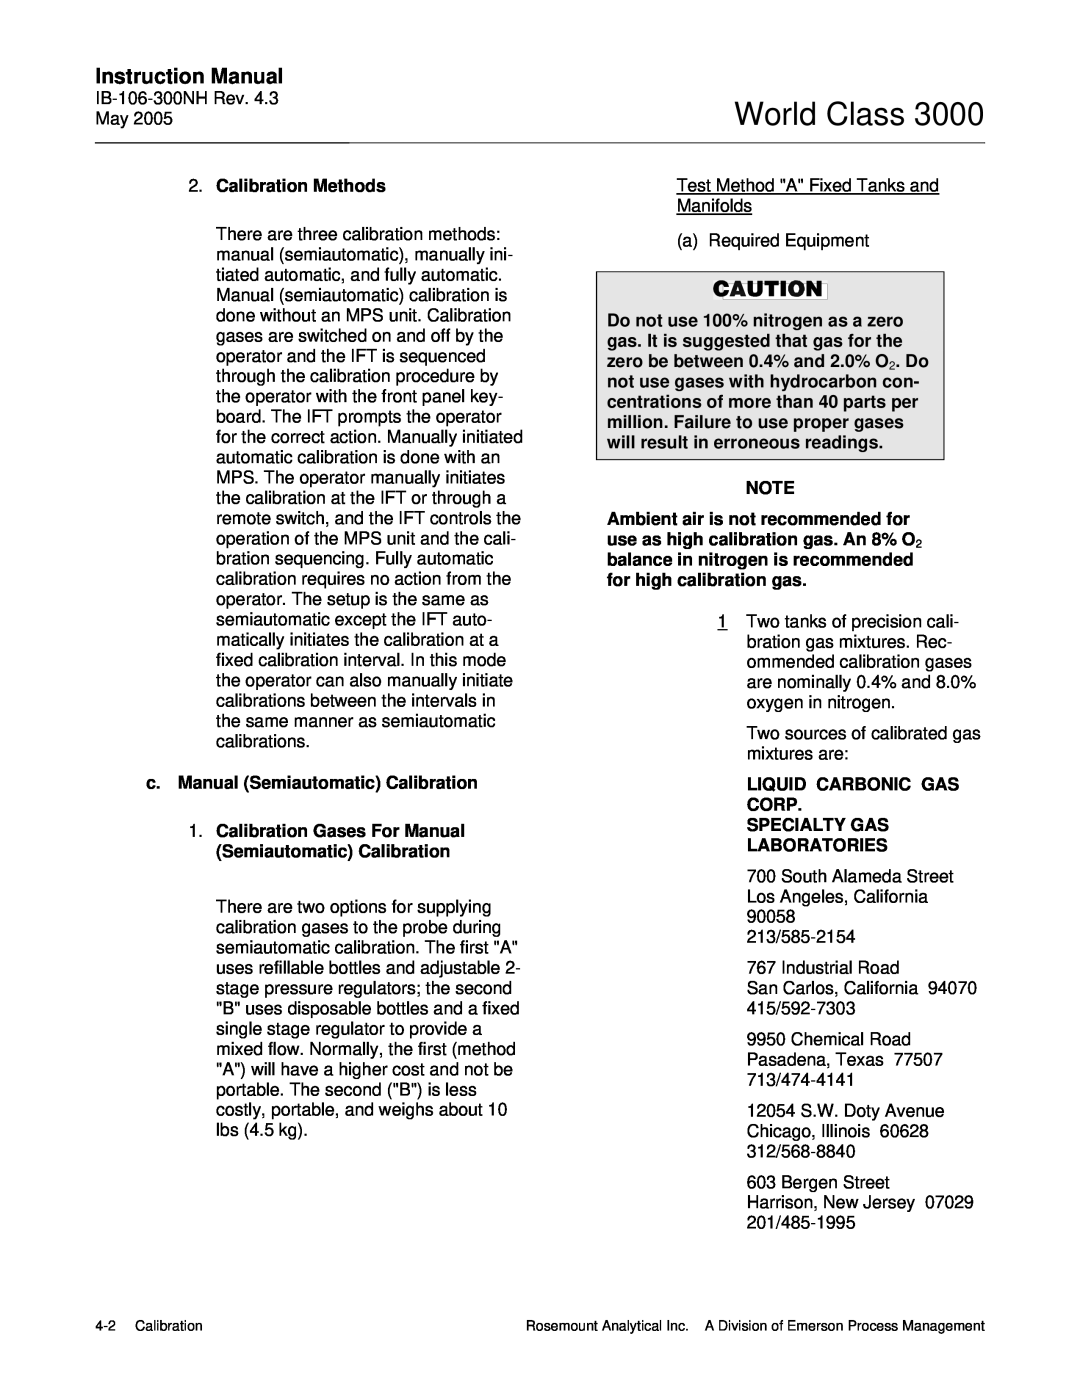 Emerson 3000 instruction manual World Class, Instruction Manual, Calibration Methods, c.Manual Semiautomatic Calibration 